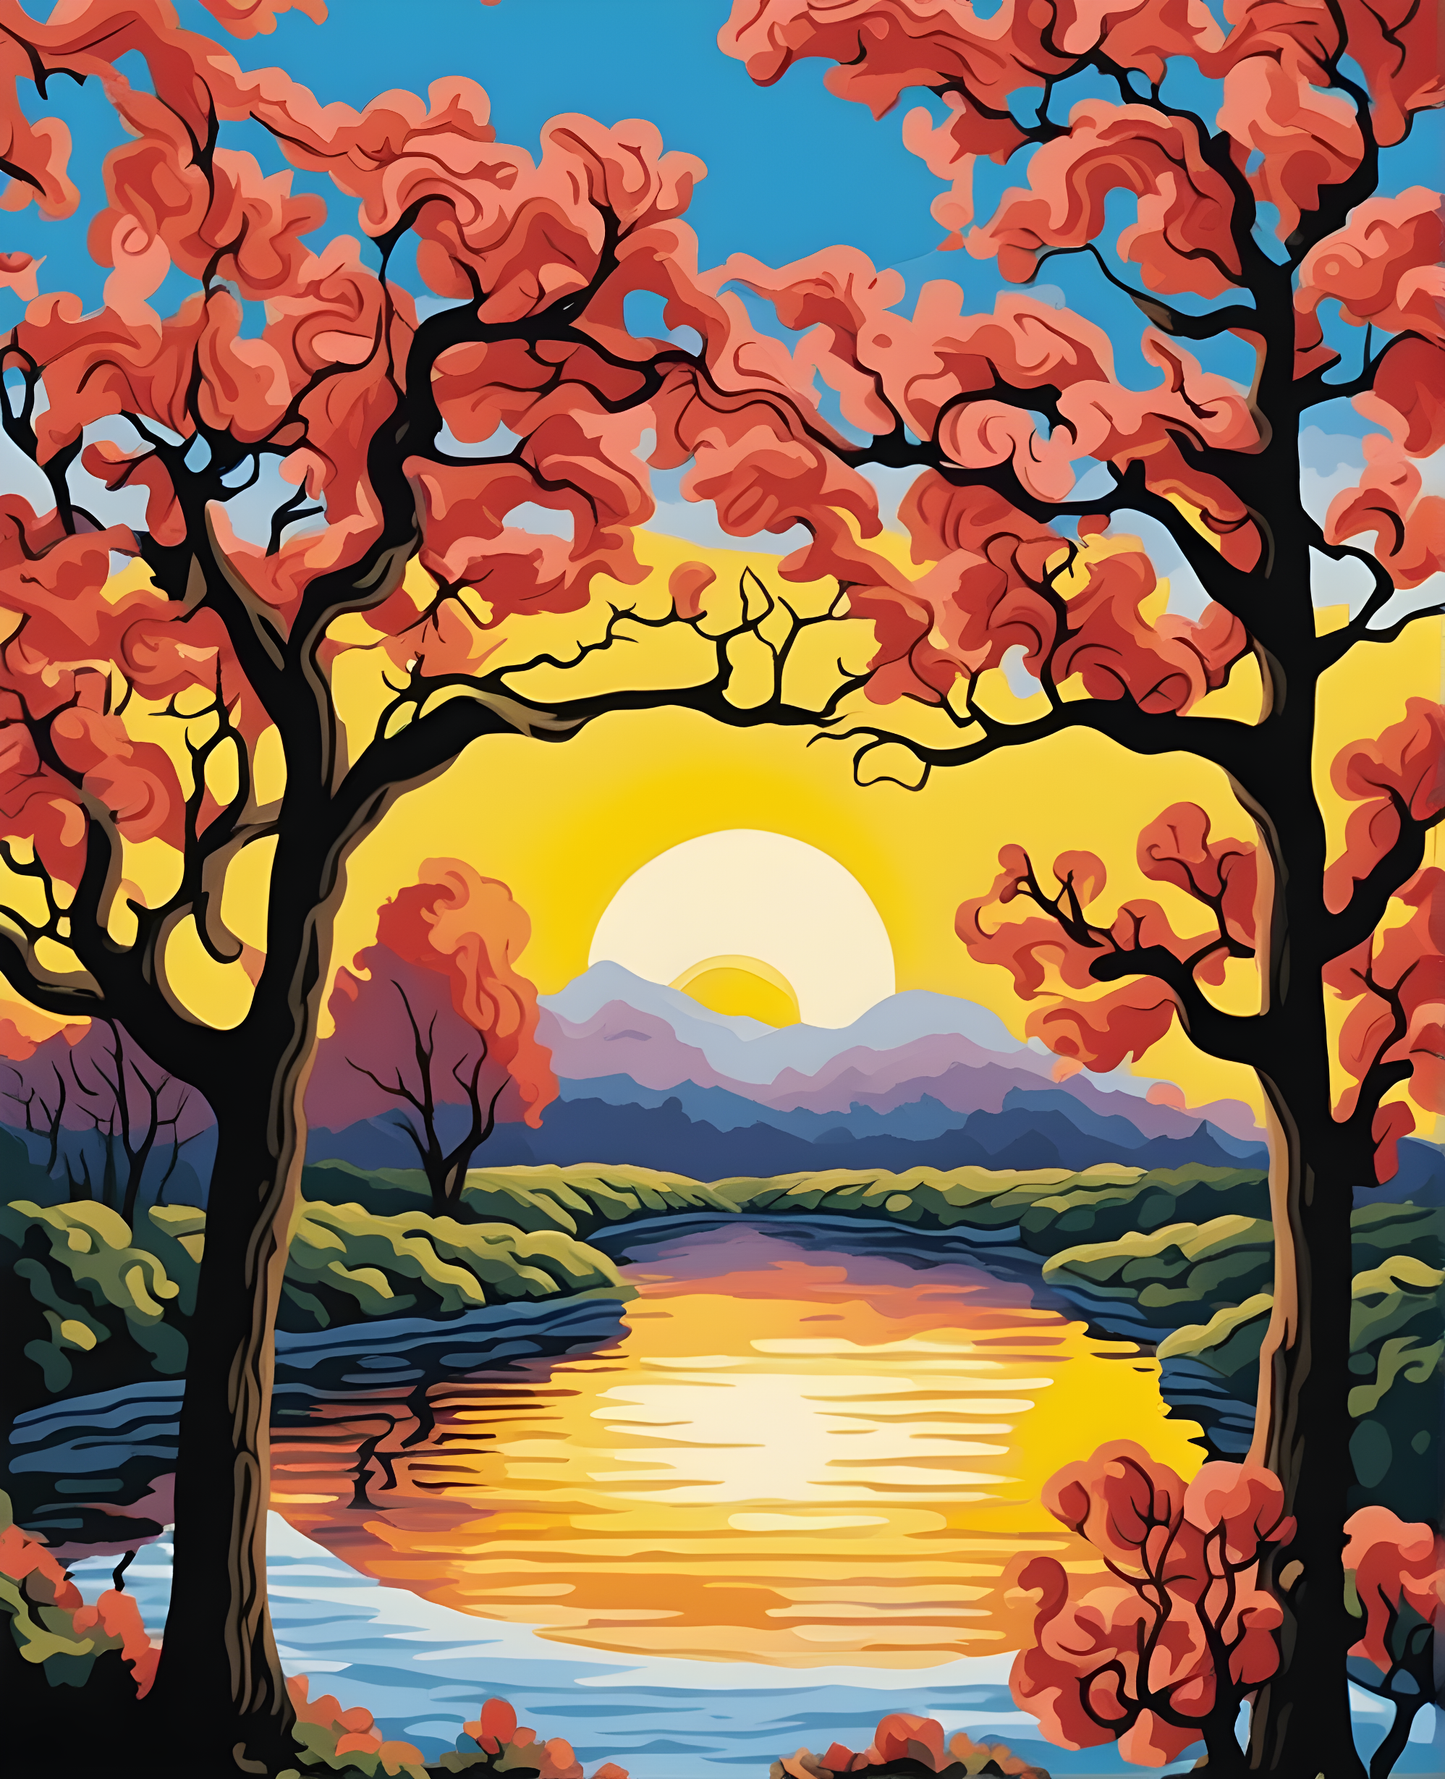 River Sunrise (1) - Van-Go Paint-By-Number Kit